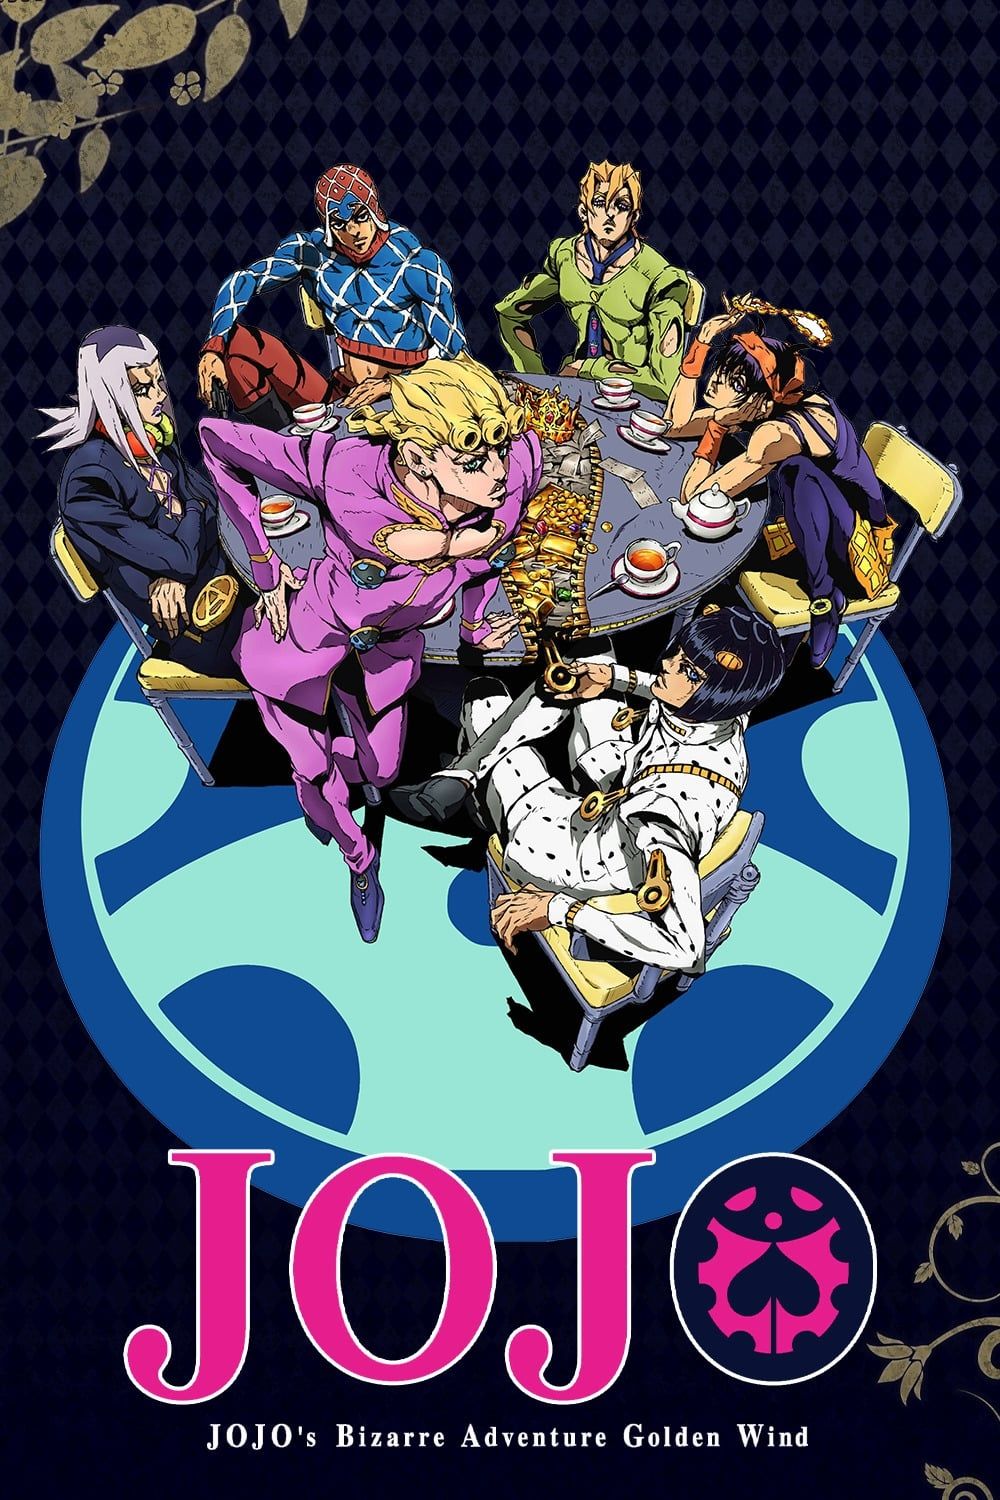 Where To Watch “JoJo's Bizarre Adventure” Anime Online [For Free]